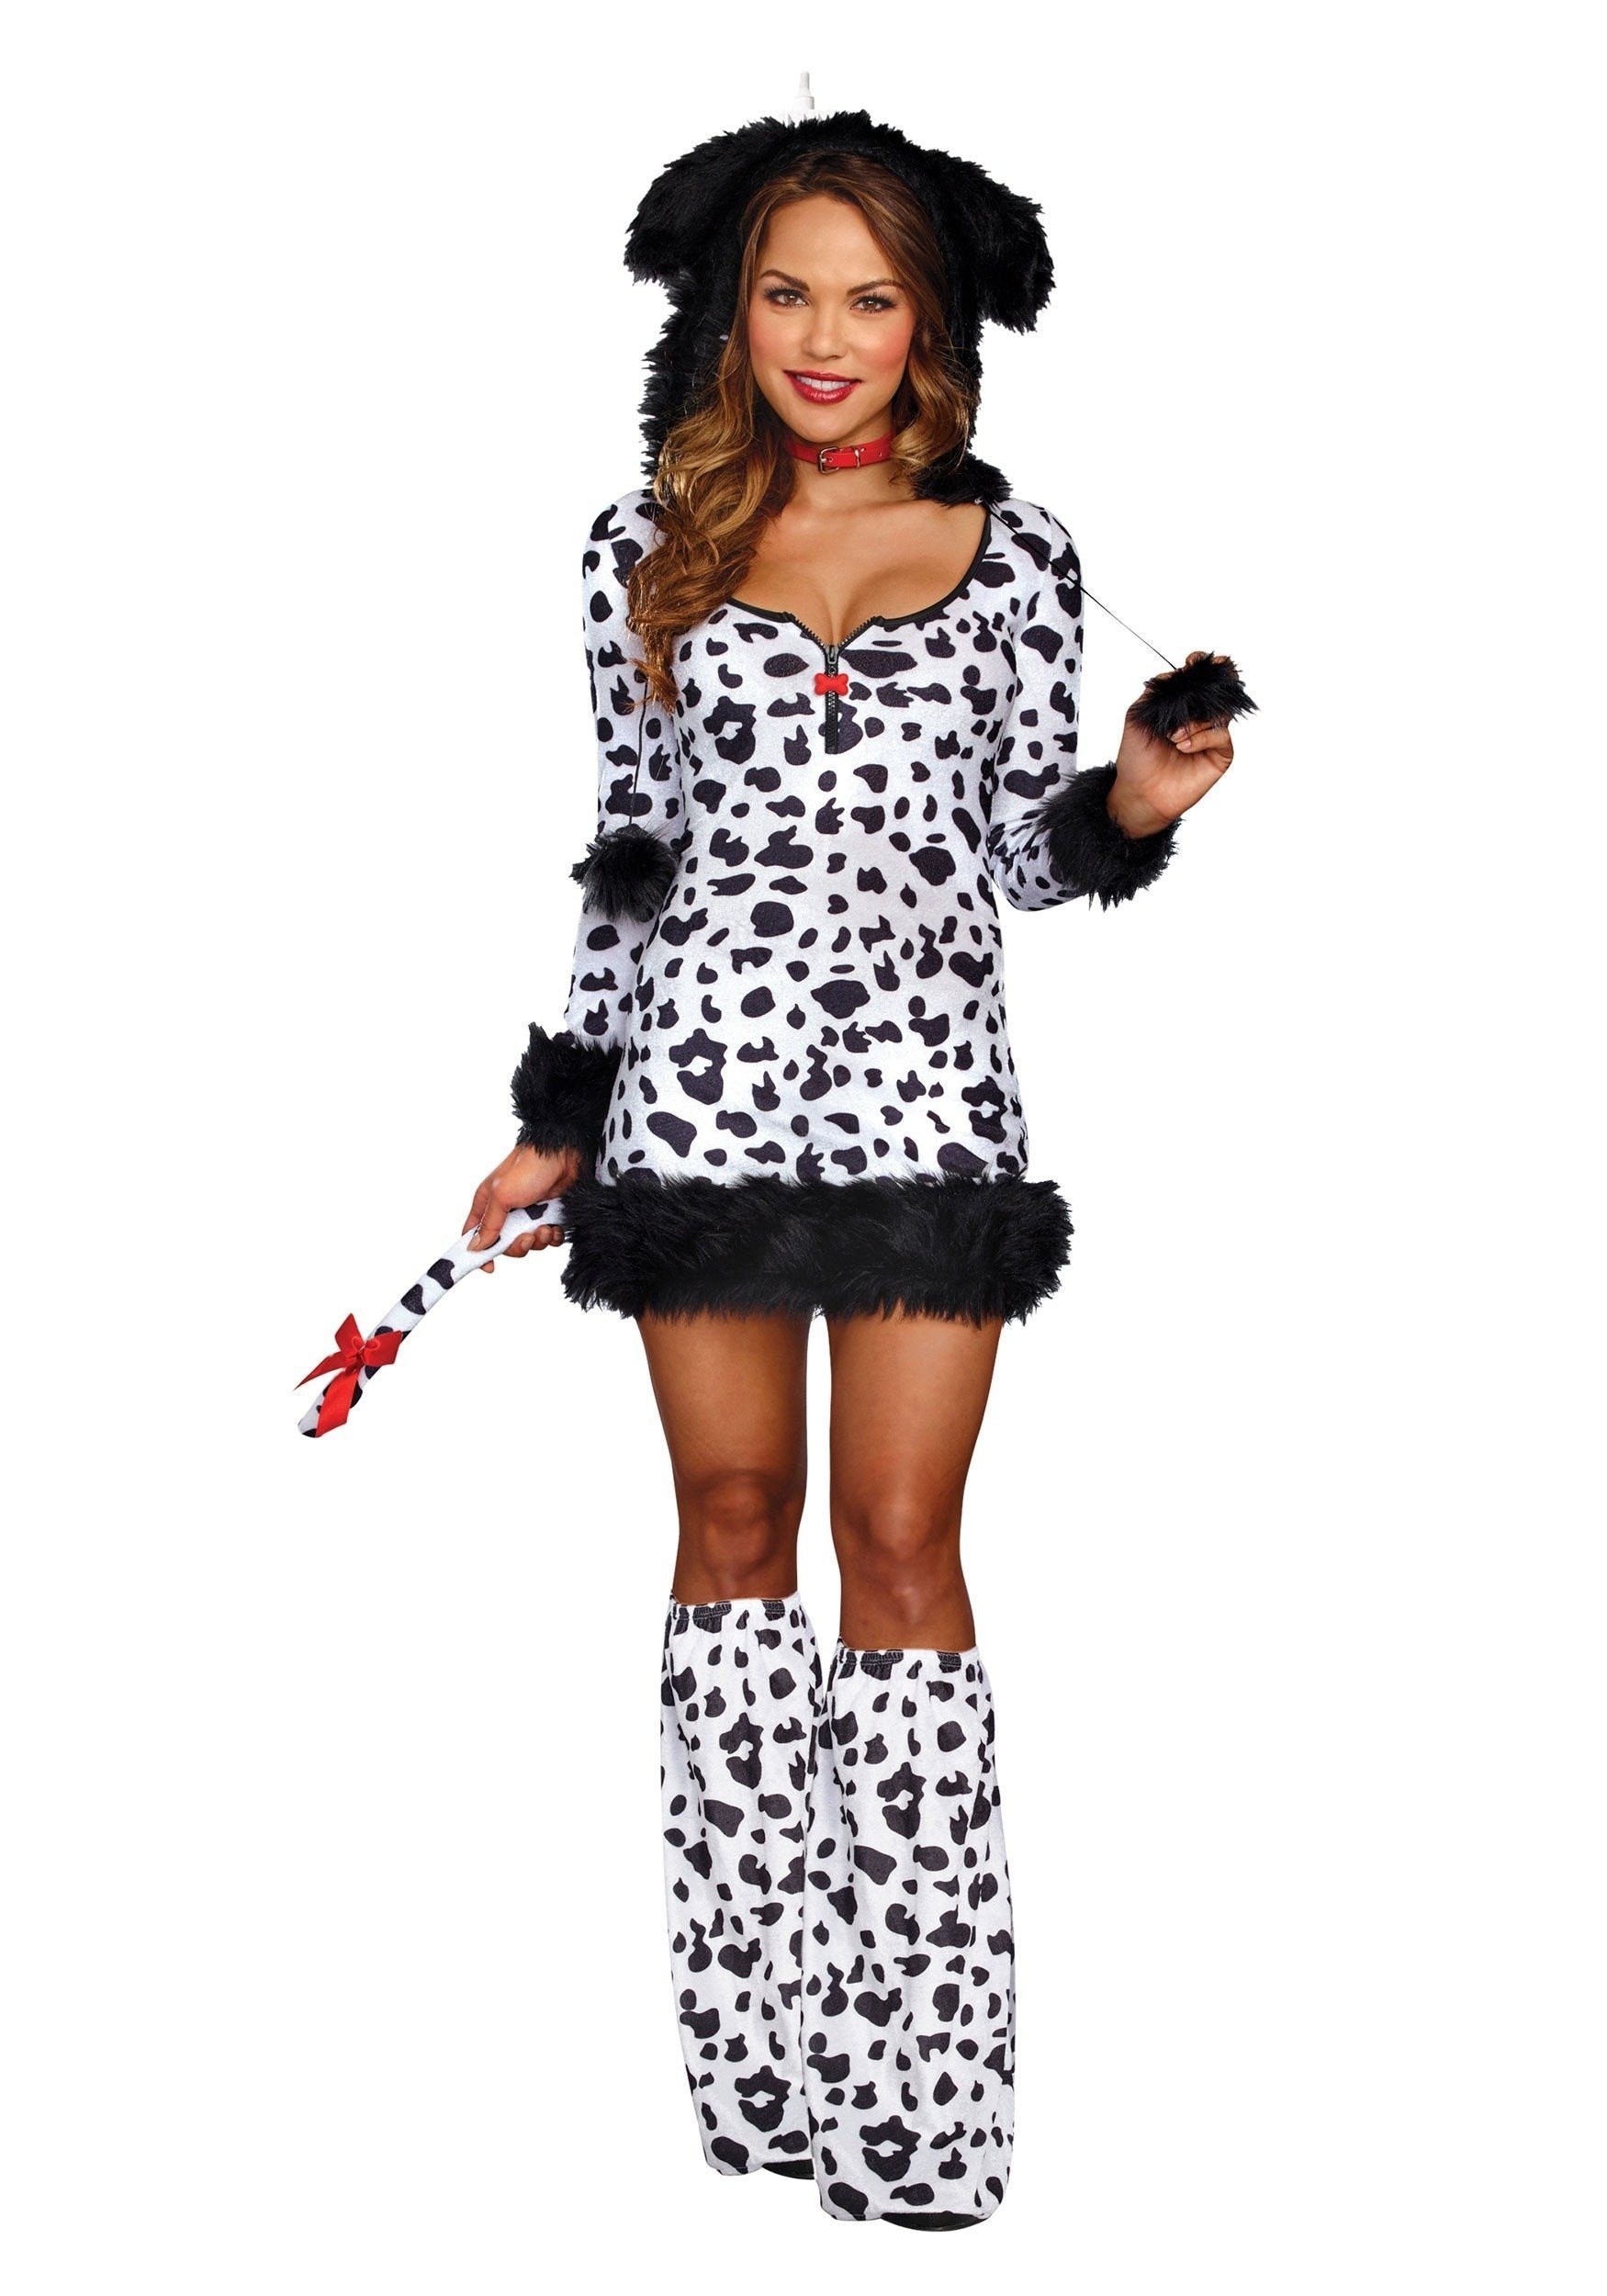 Dreamgirl Adult Dalmatian Costume, Womens Darling Dalmatian Halloween Costume - Medium